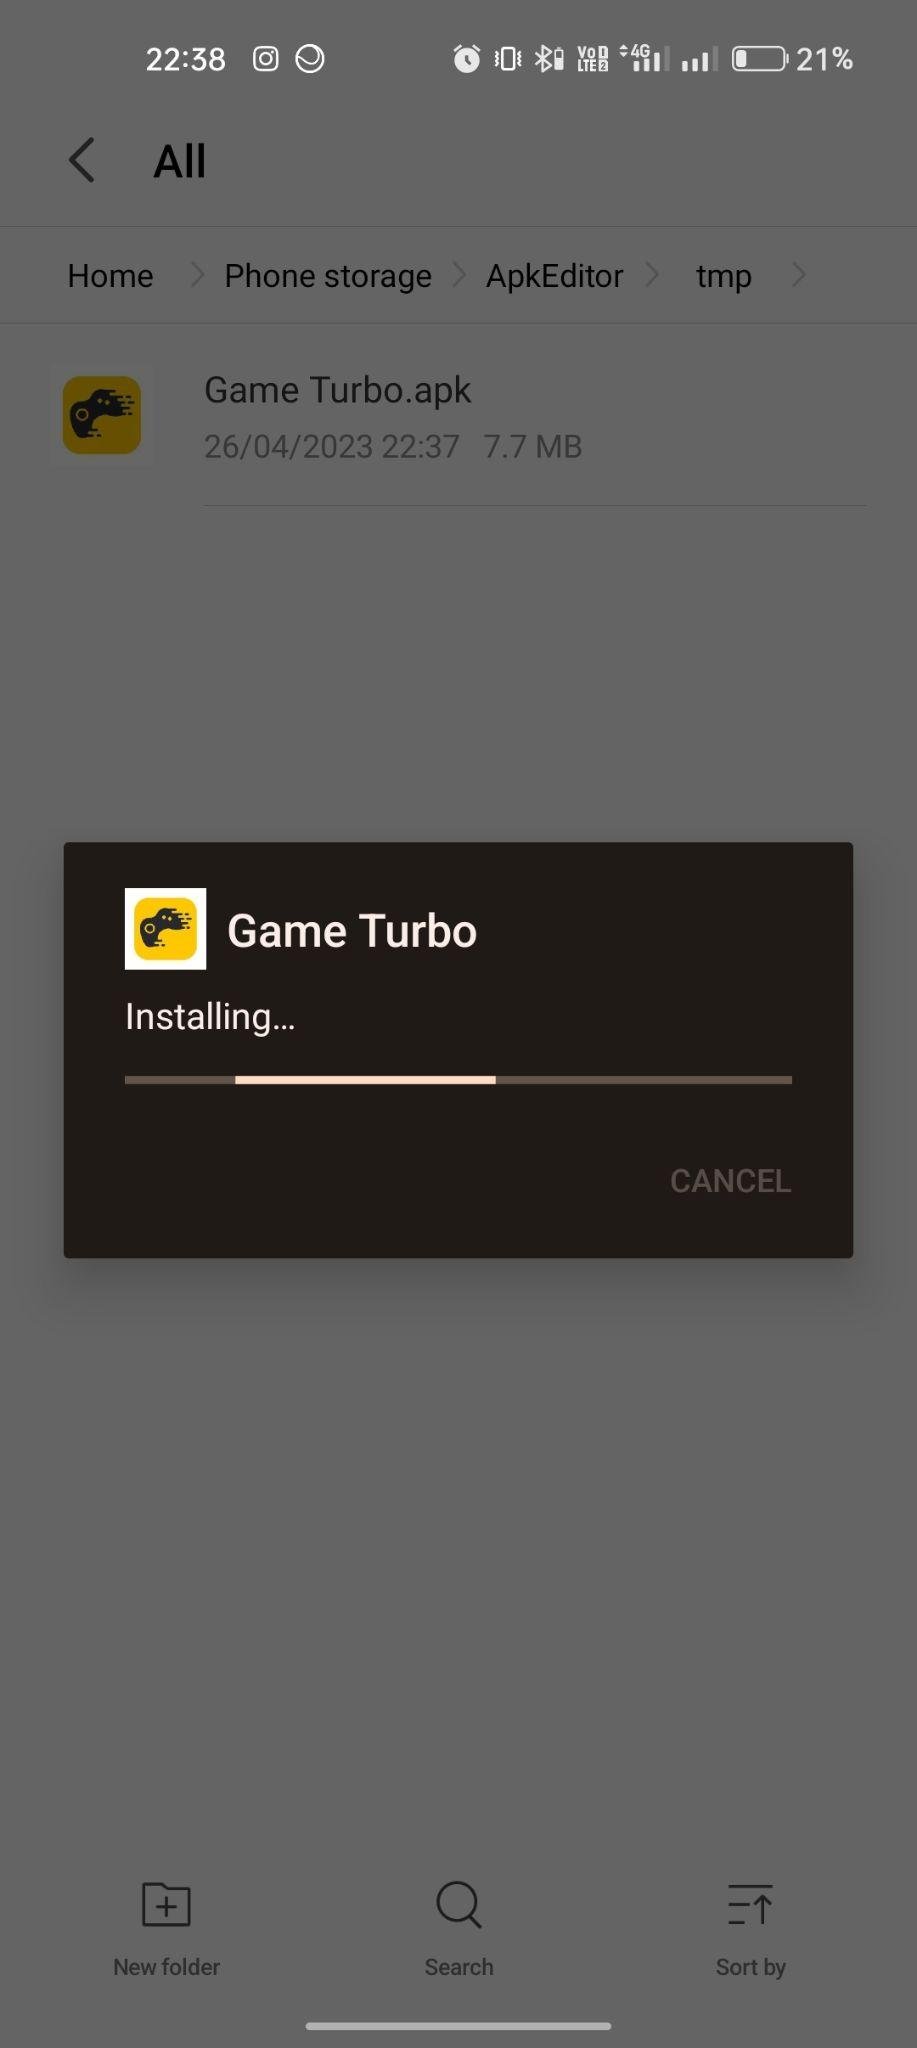 Game Turbo apk installing